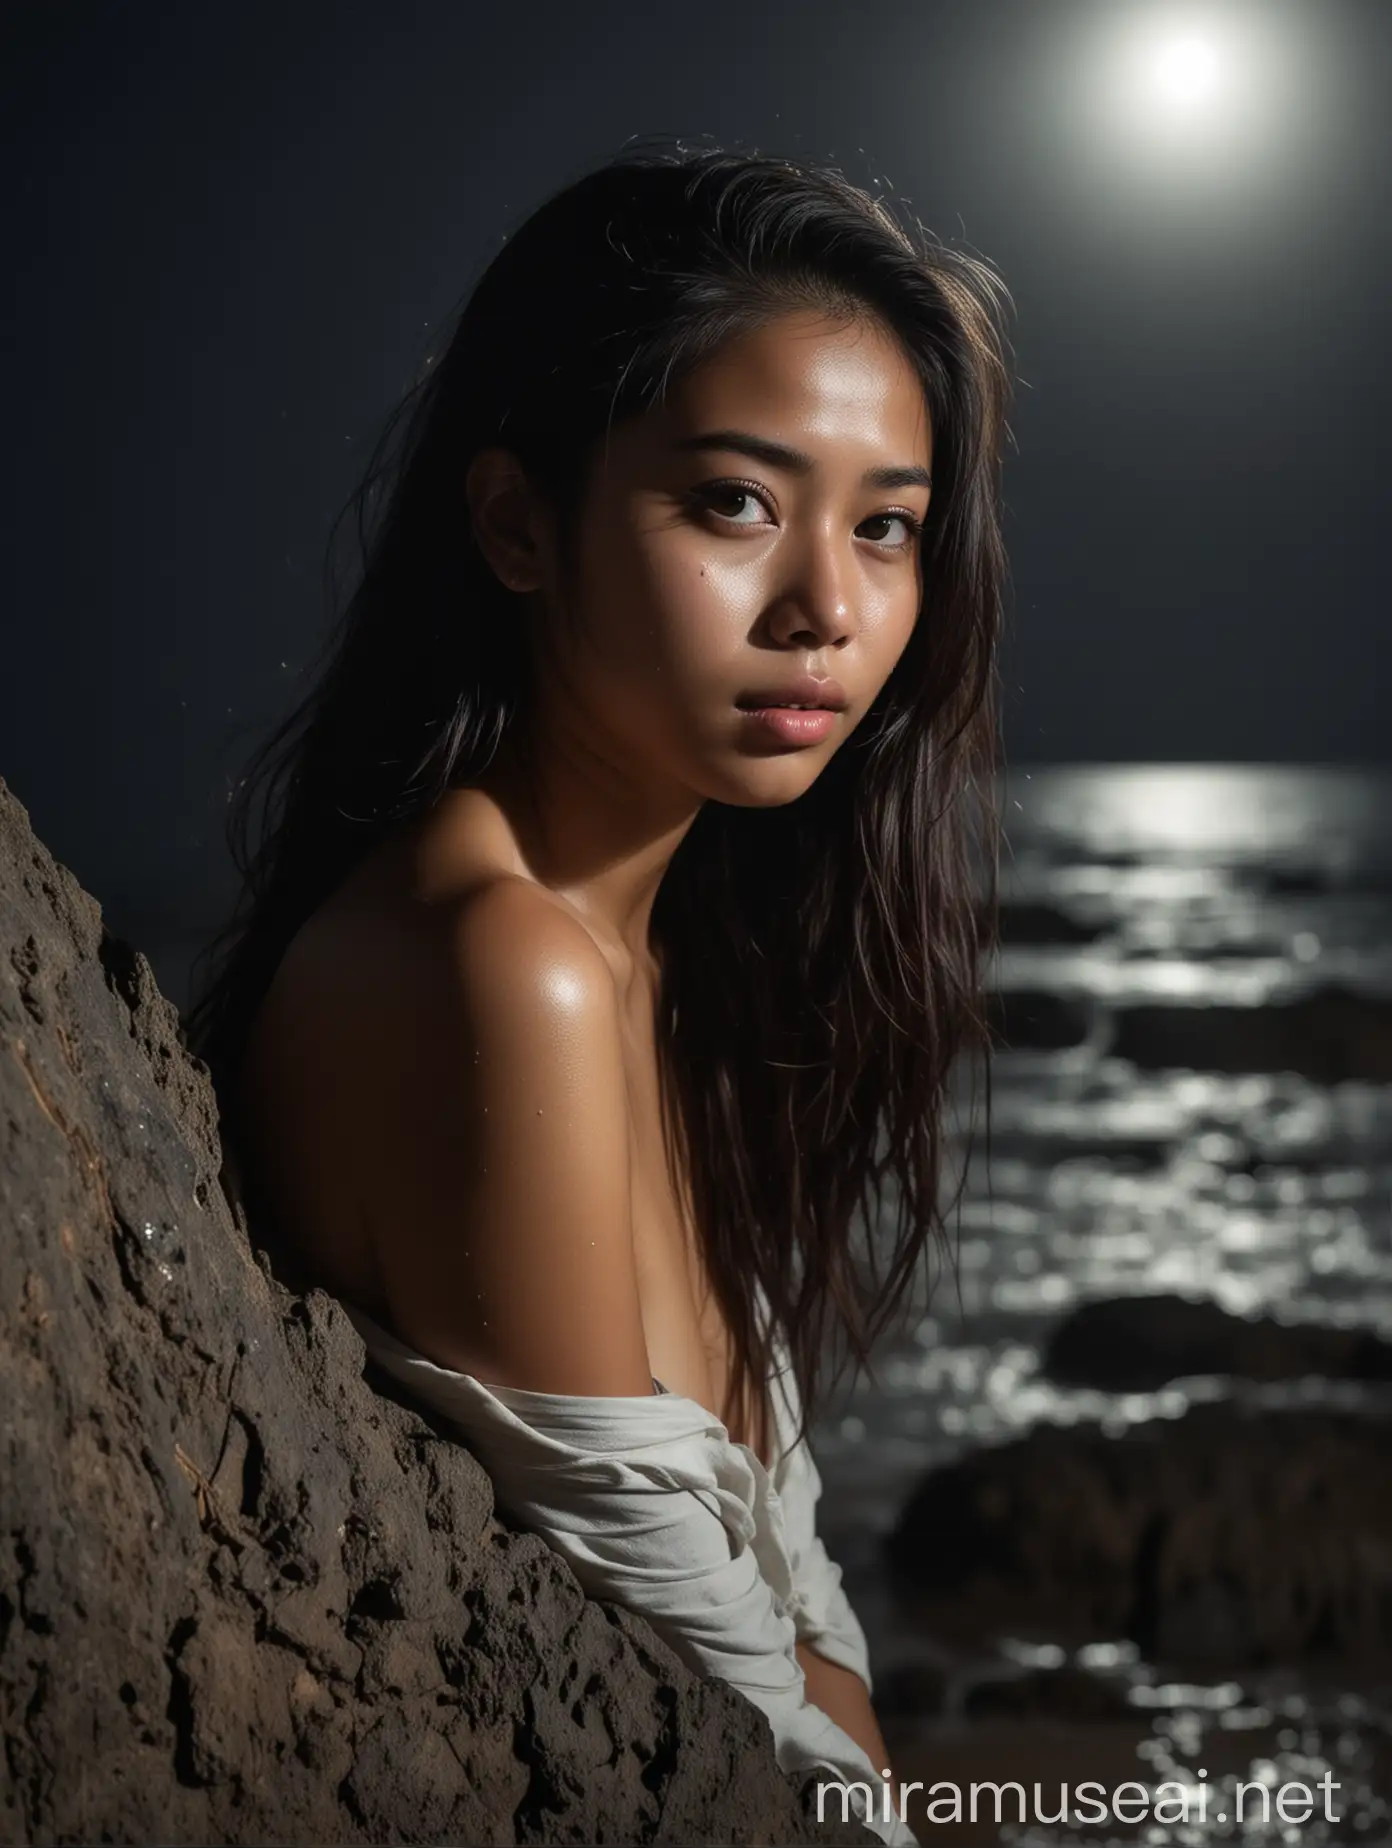 Sad Indonesian Woman Leaning on Beach Rock at Night